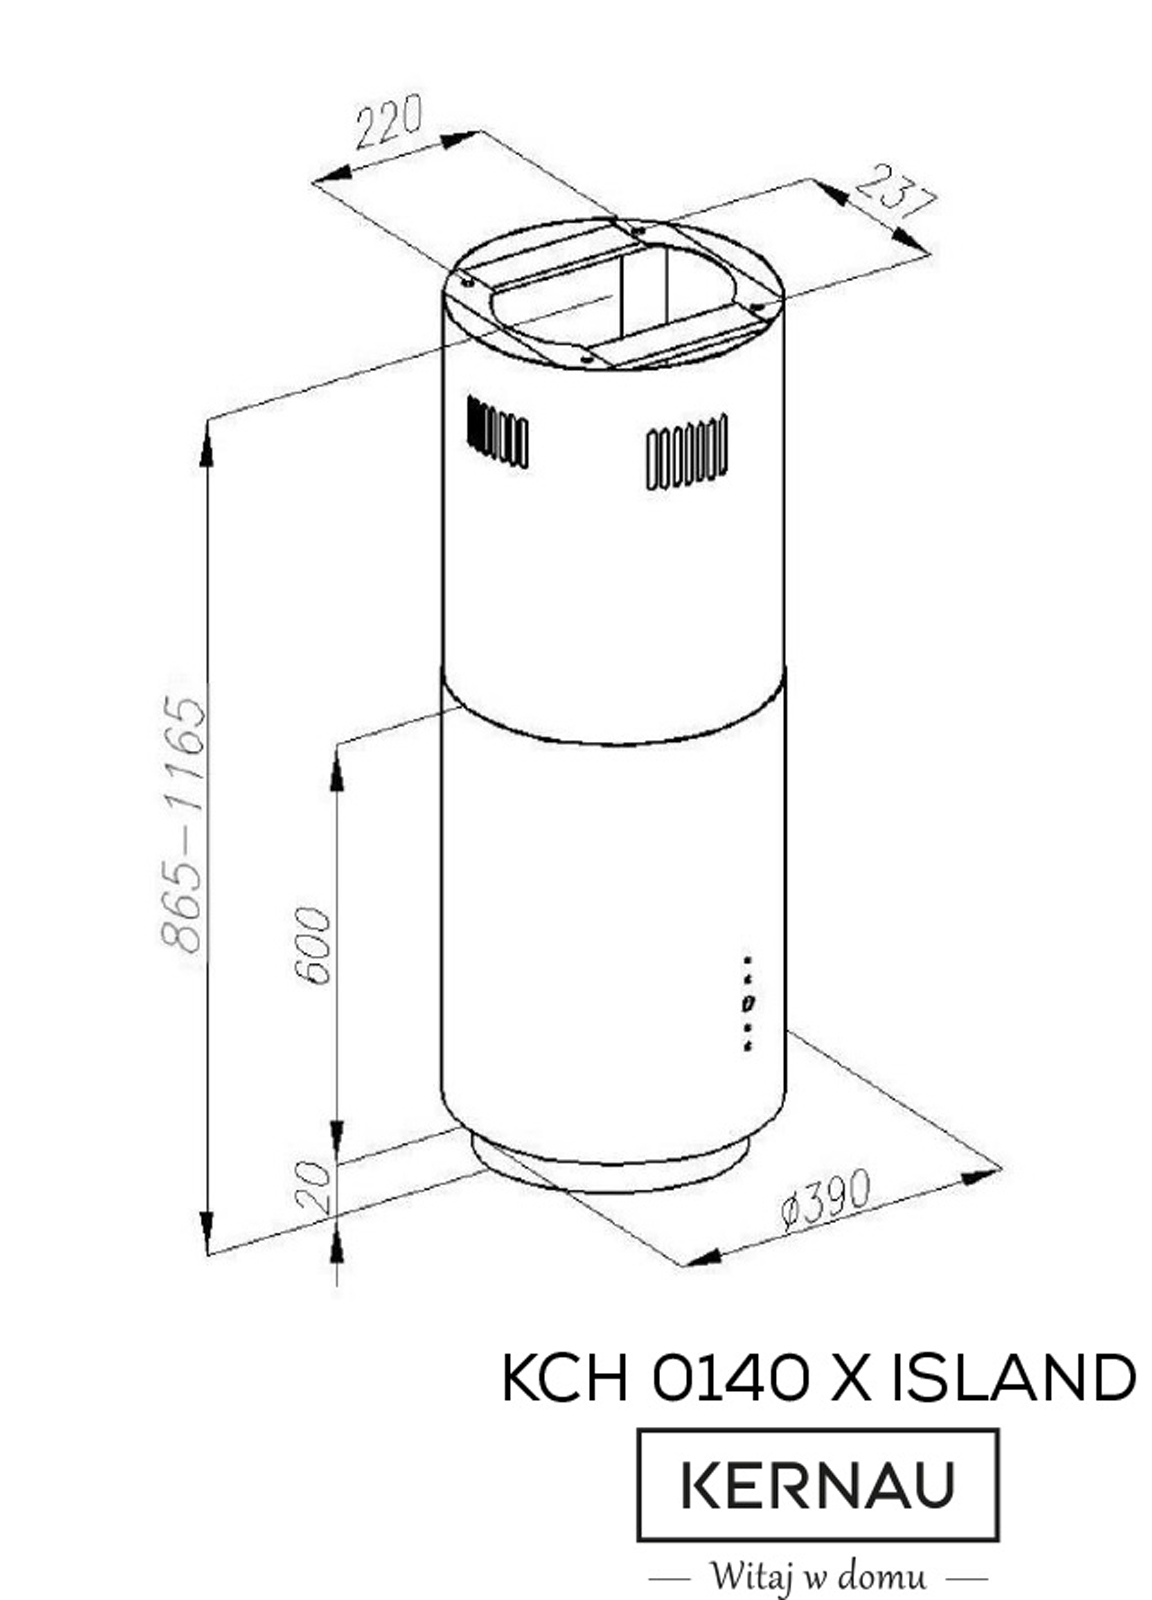 KCH 0140 X ISLAND